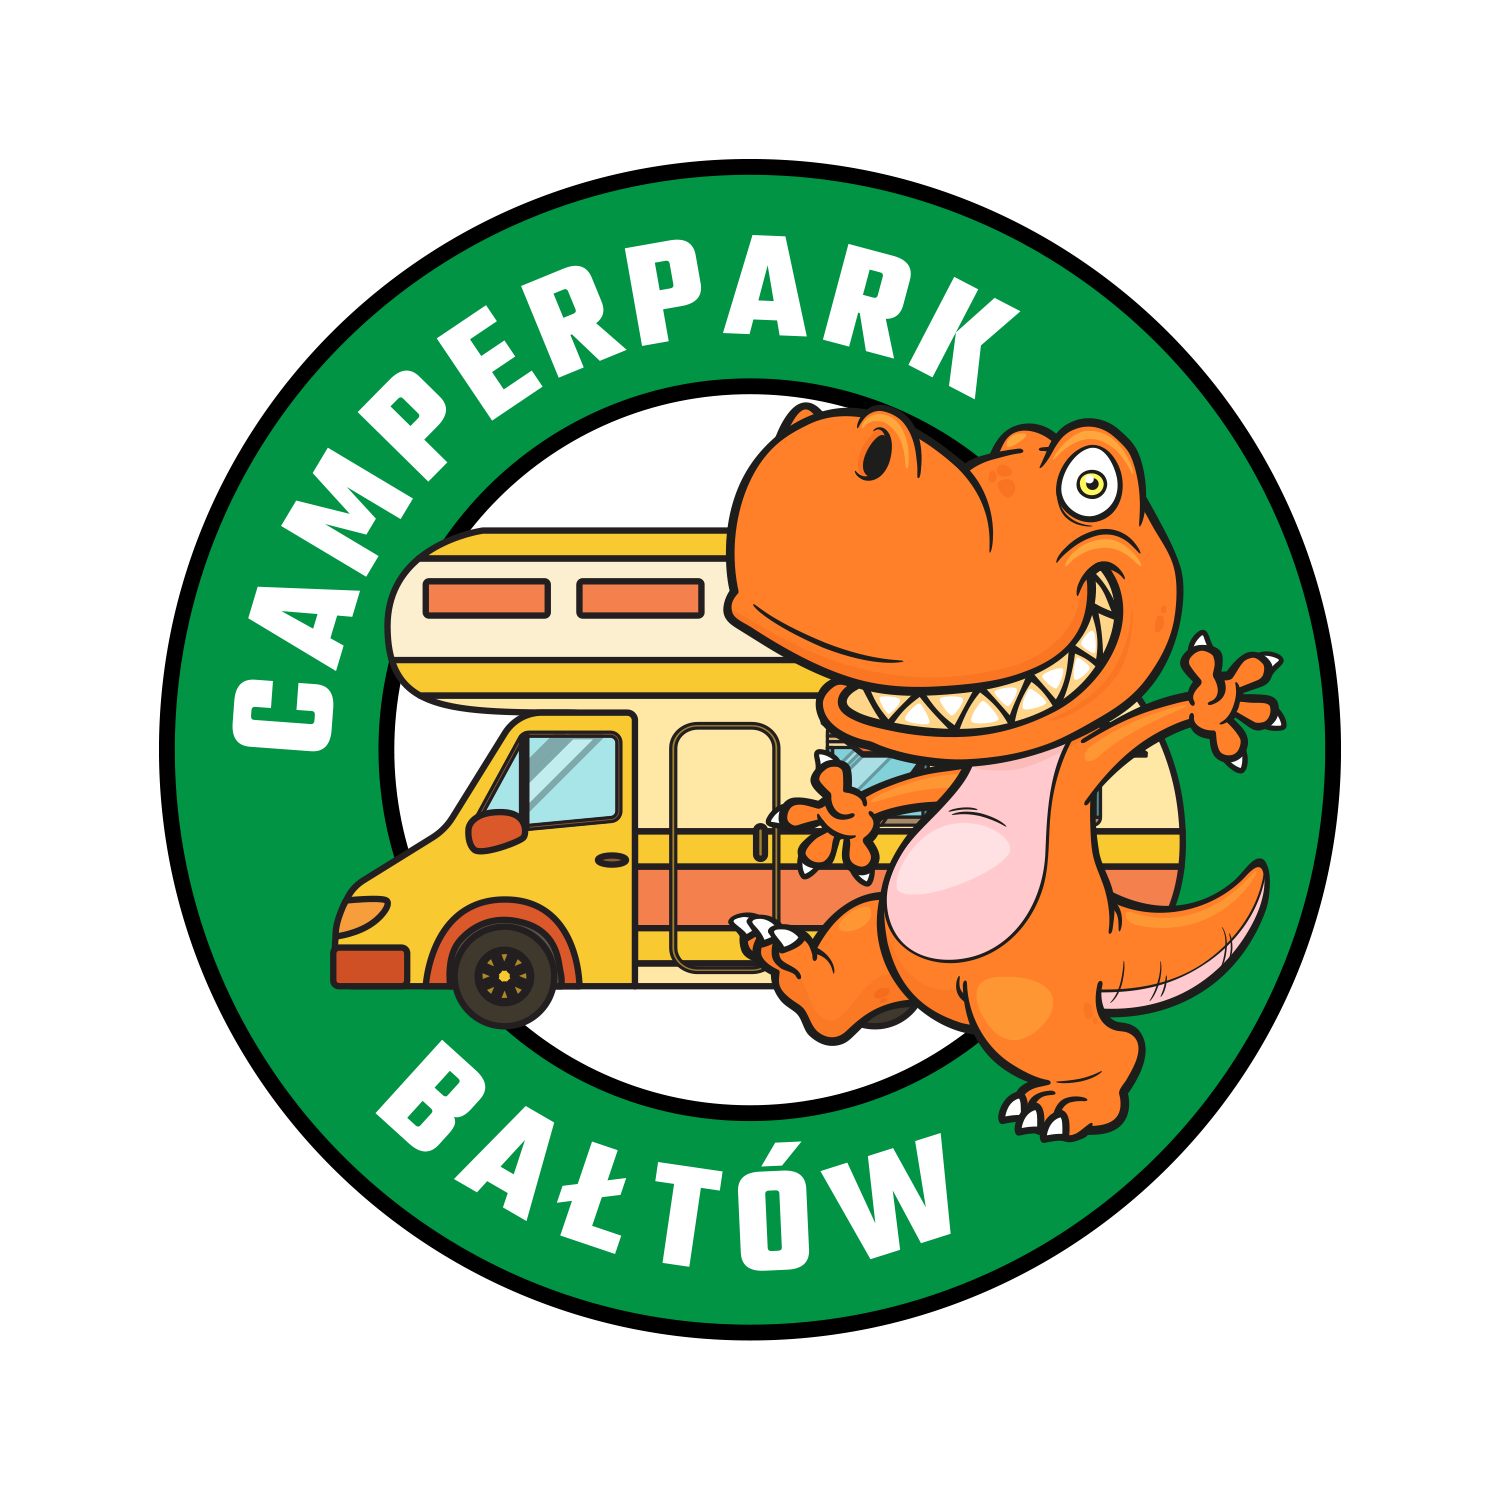 Camper-Park-Baltow